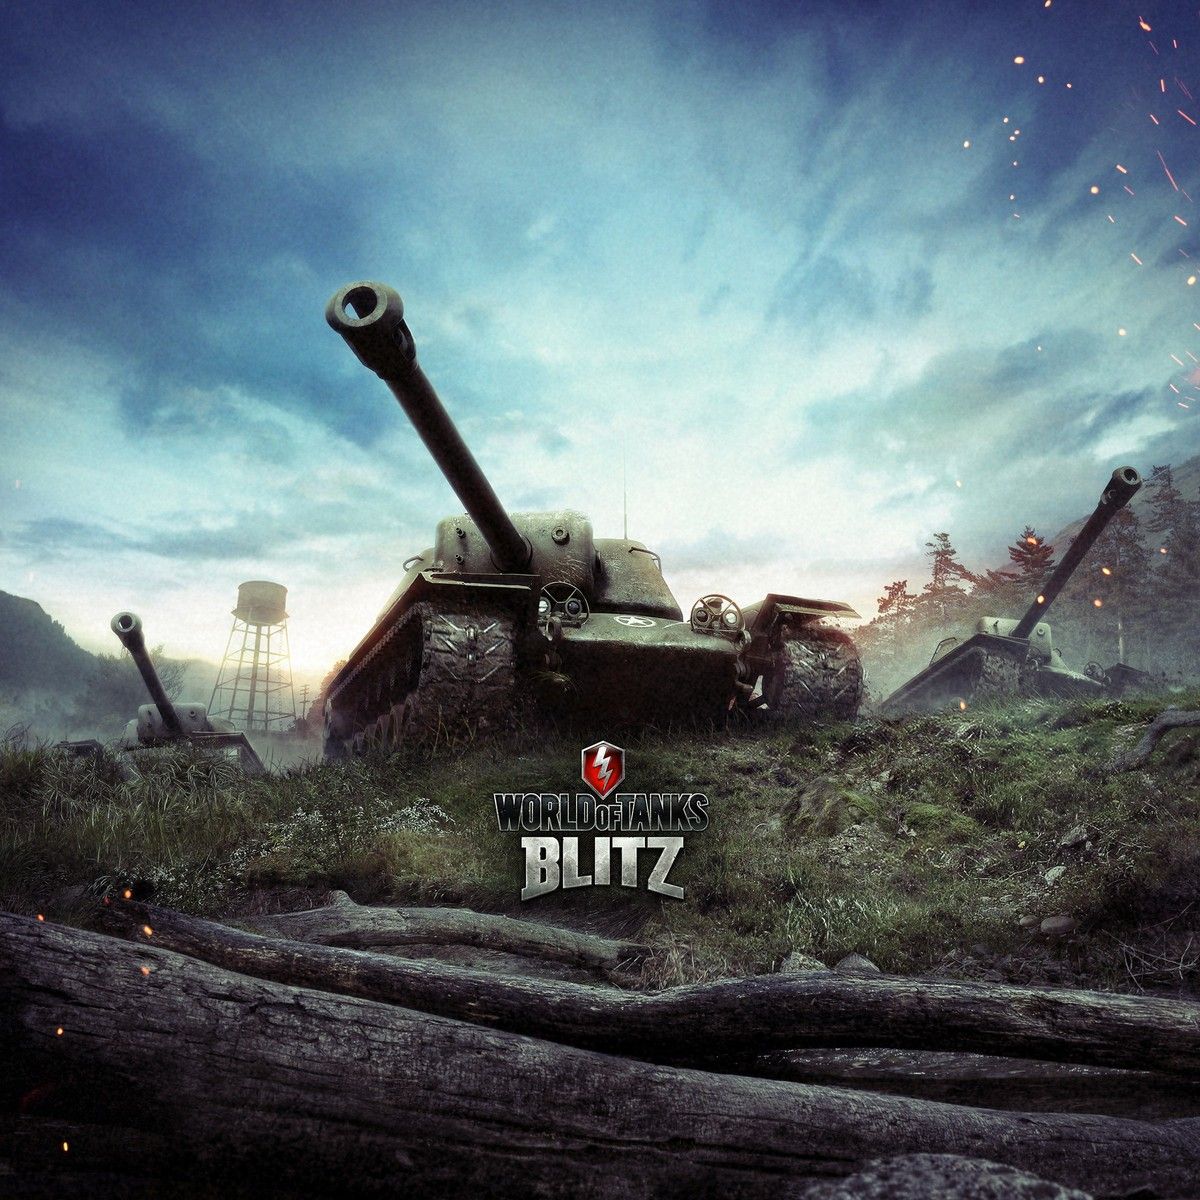 World of Tanks Blitz Wallpaper Free World of Tanks Blitz Background